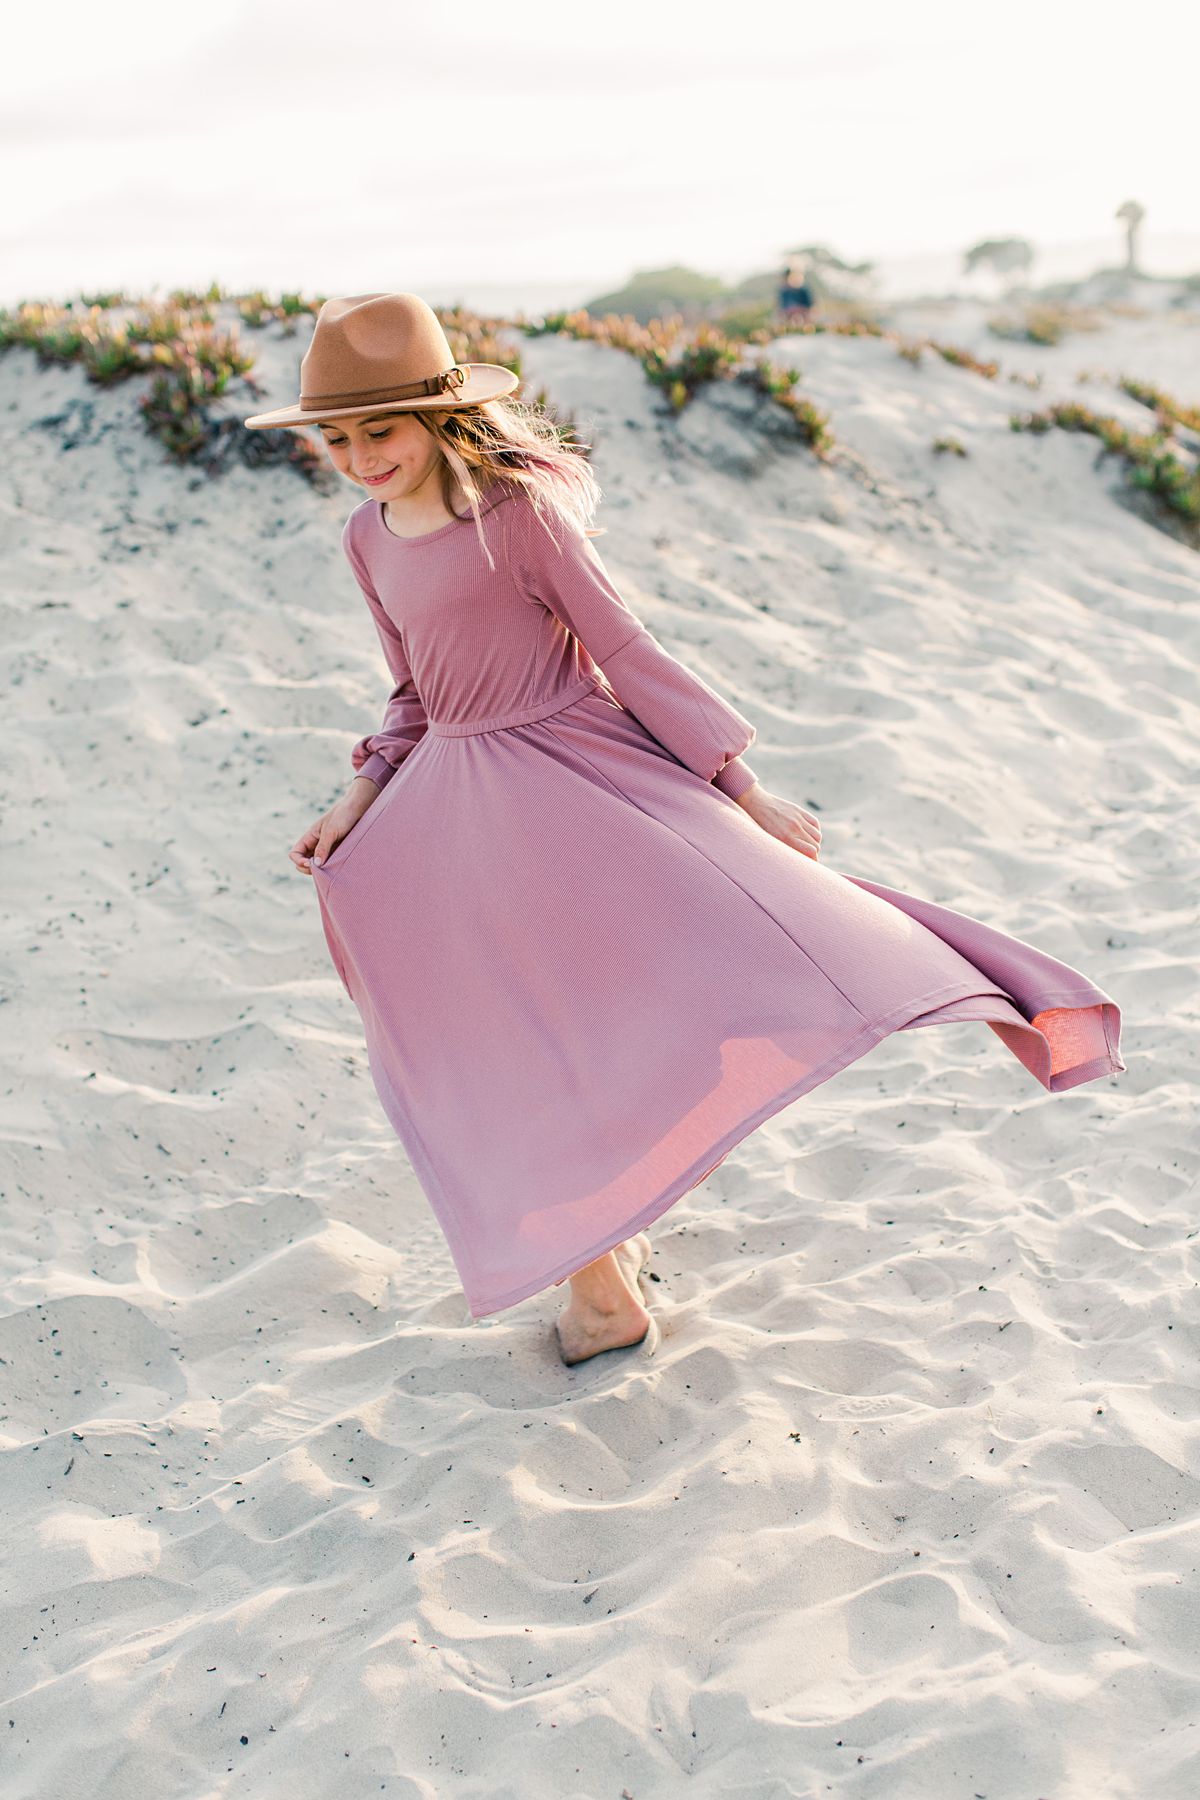 sand dune at Coronado dog beach, a girl in pink dress walking